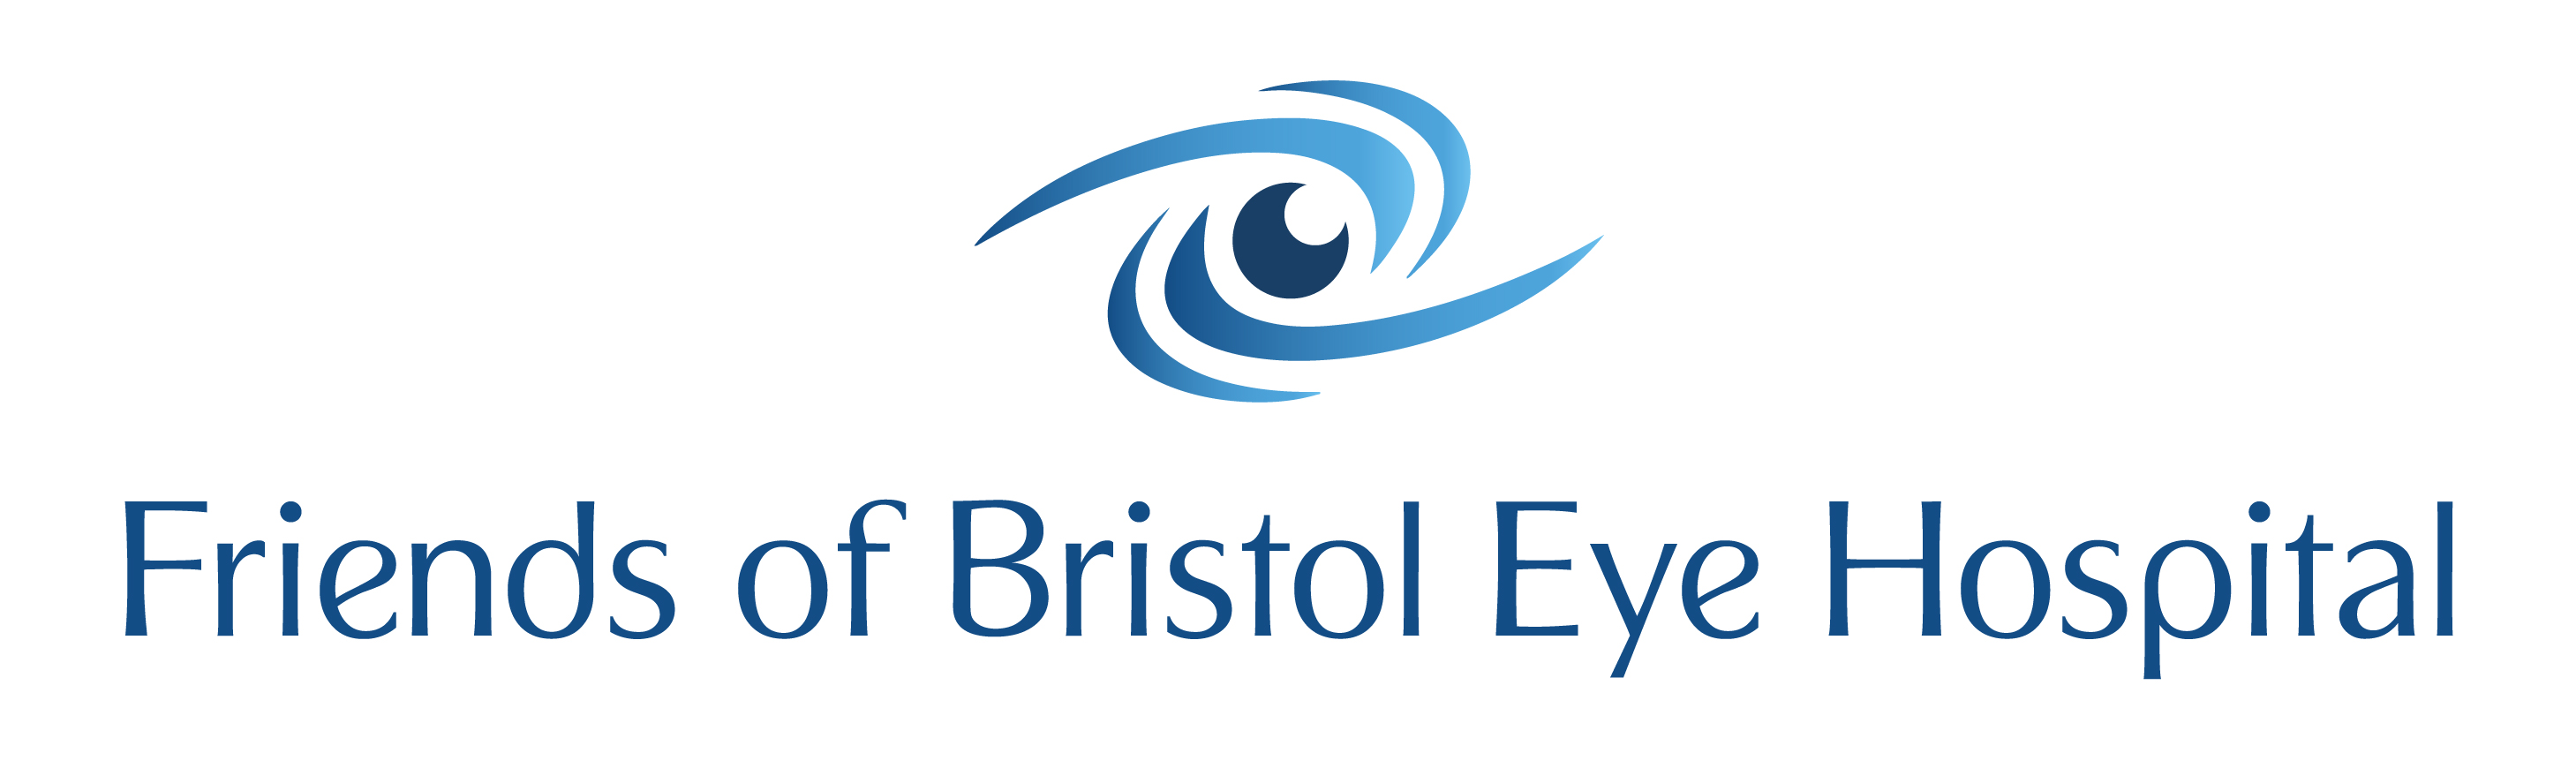 Friends of Bristol Eye Hospital logo